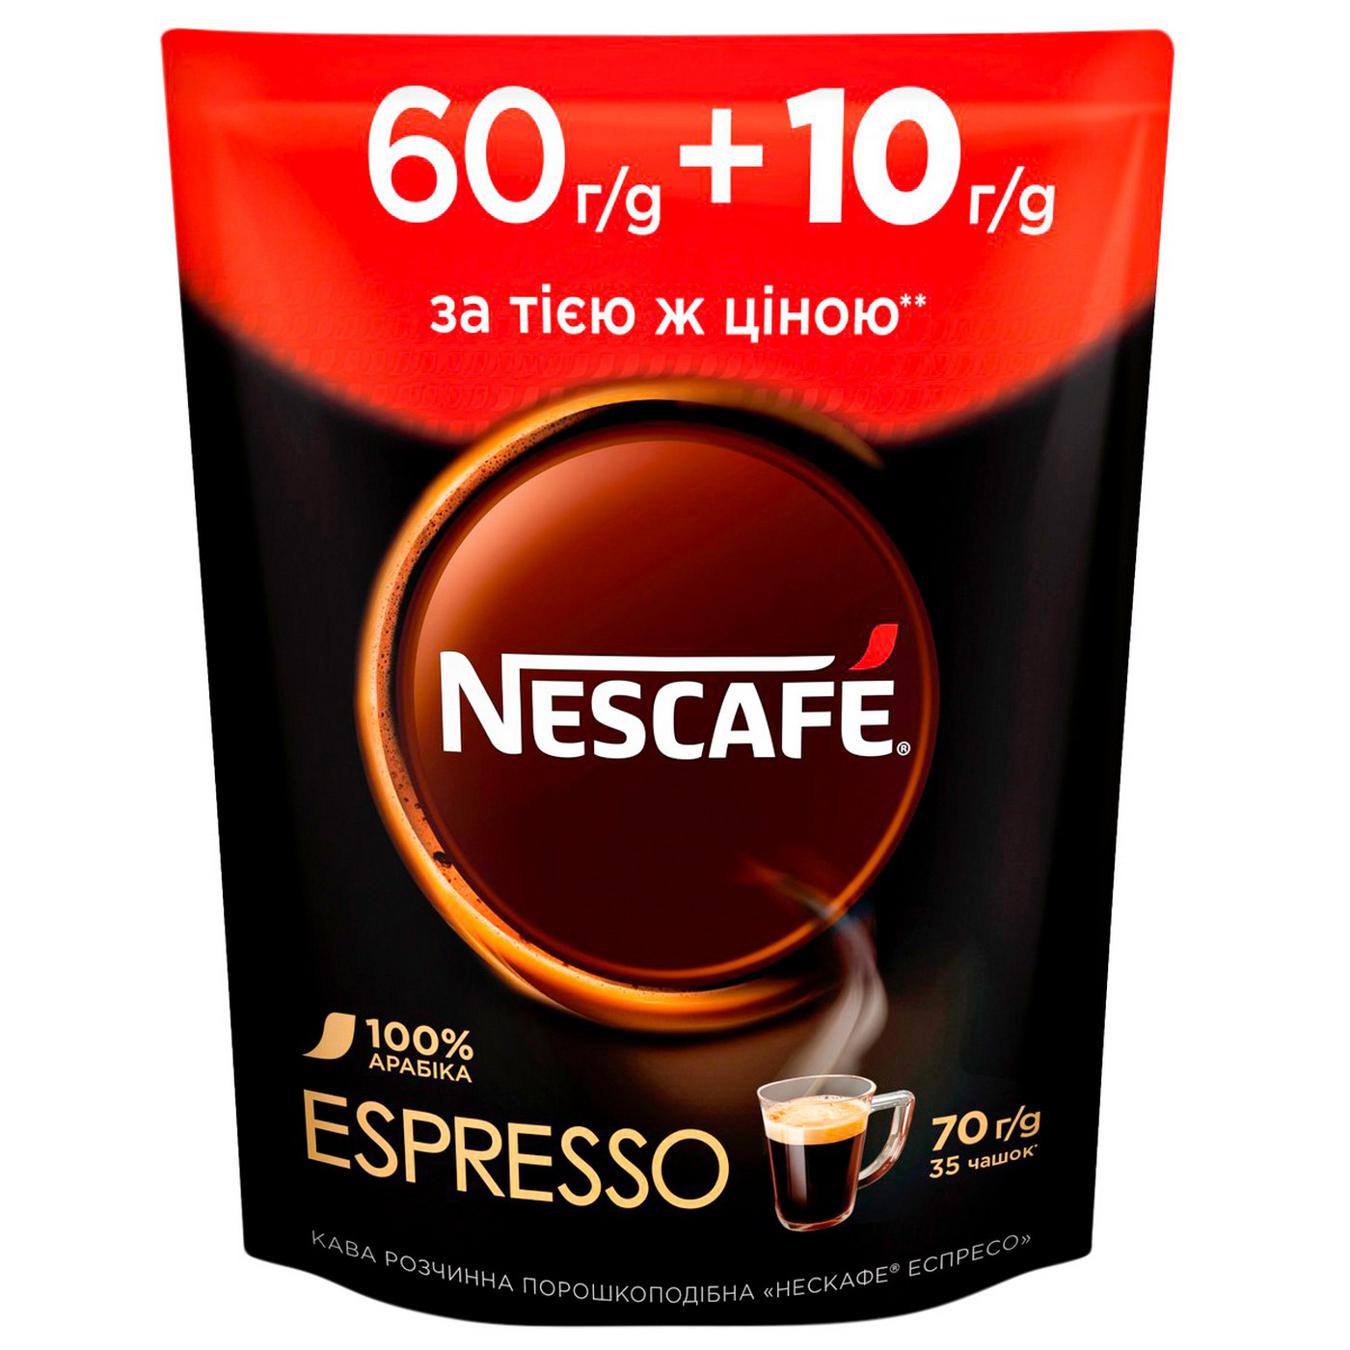 Nescafe Espresso coffee soft packaging 60g+10g